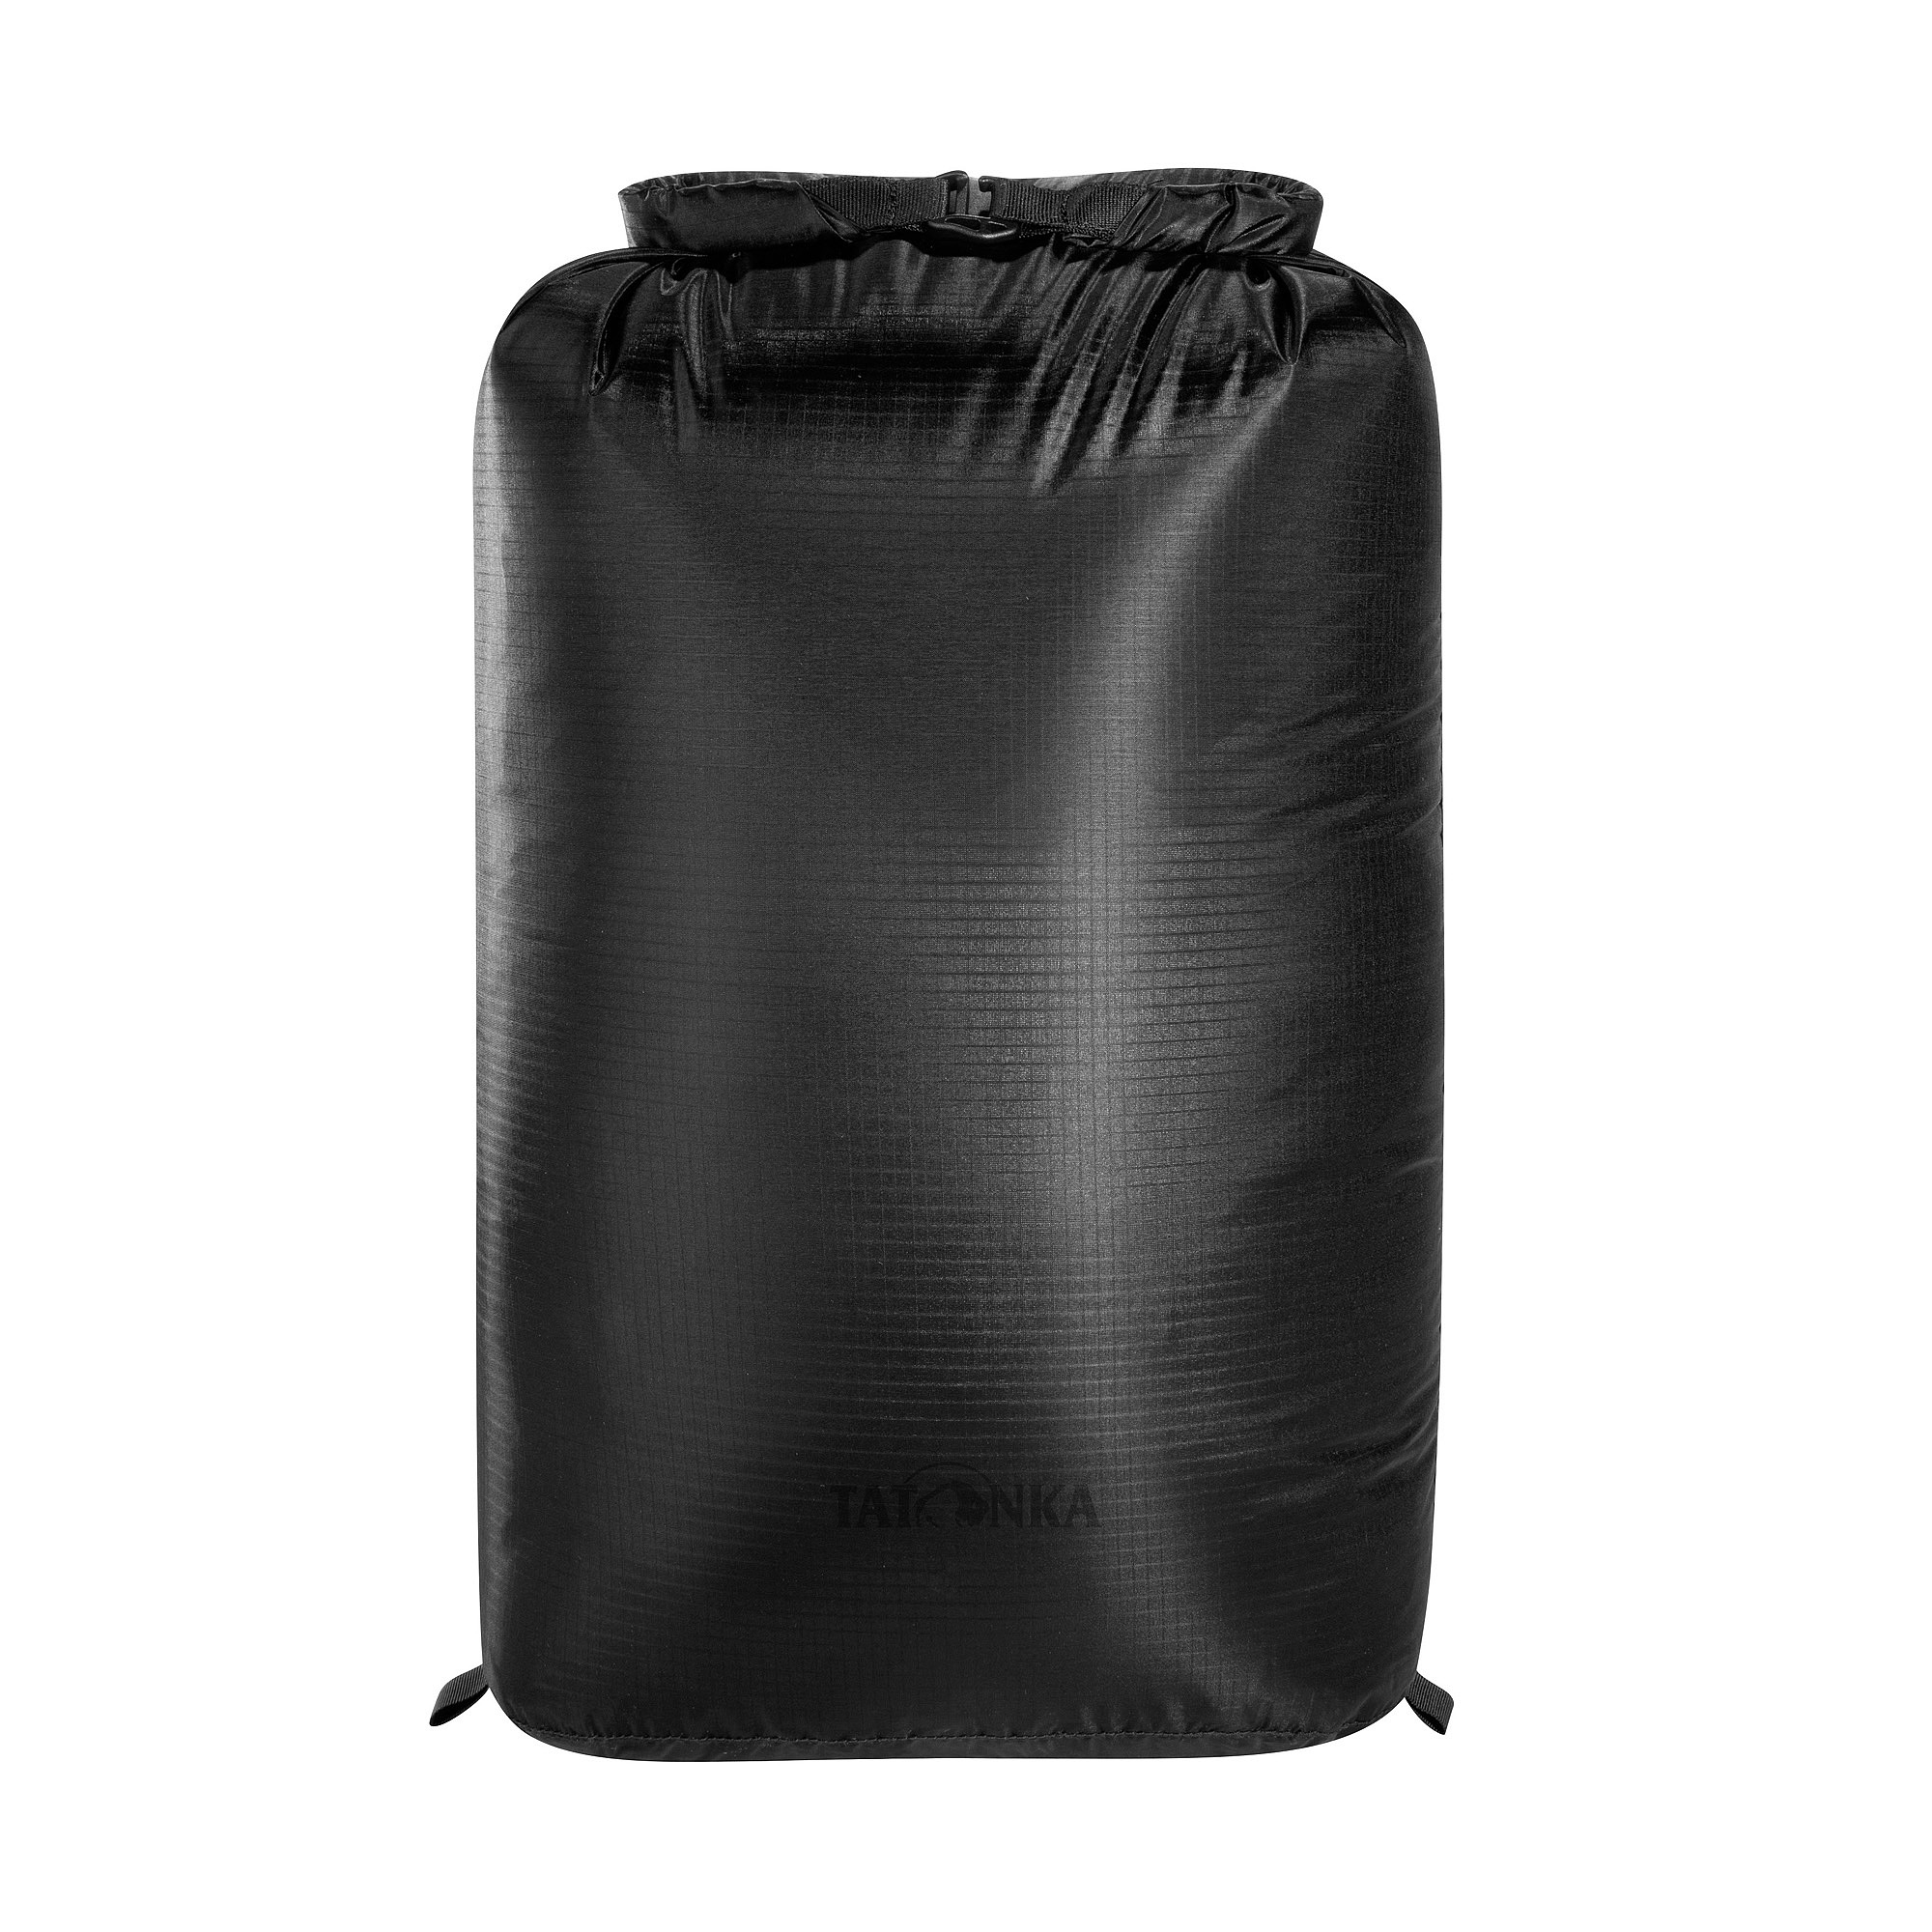 Tasche, Tatonka SQZY Dry Bag 15l black schwarz Reisezubehör 4013236393729